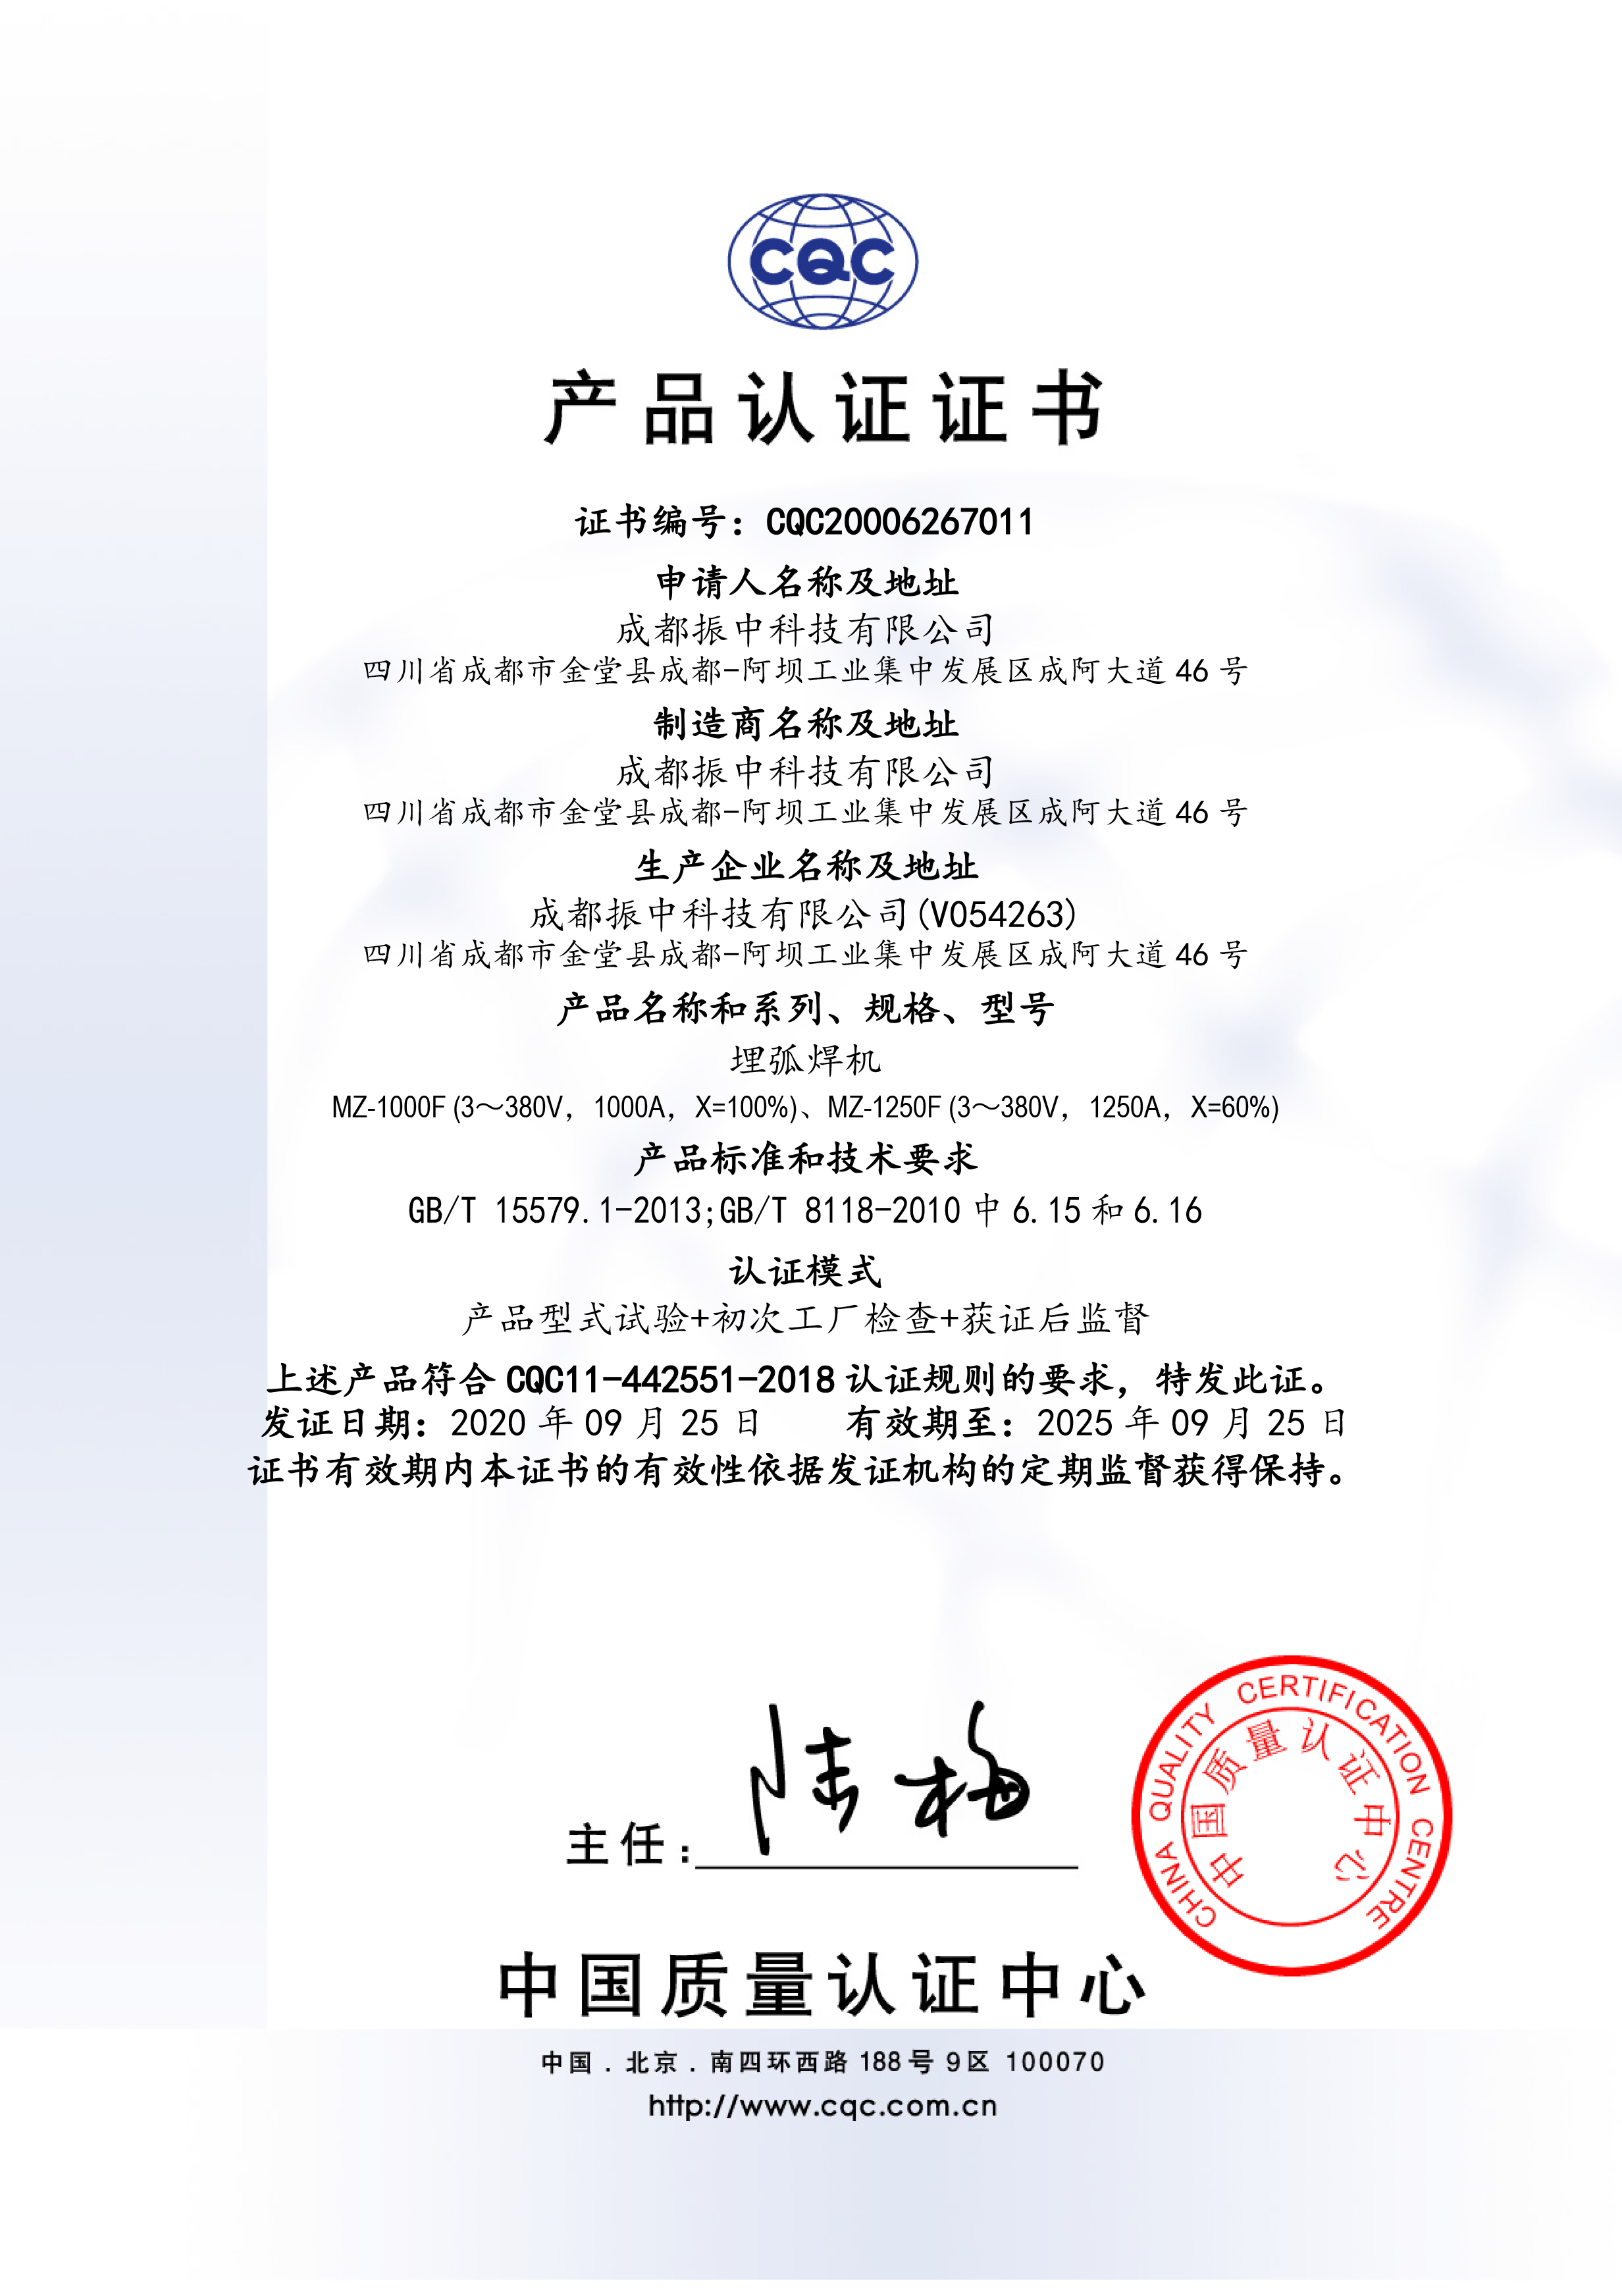 MZ-F自动埋弧焊机CQC证书中文版